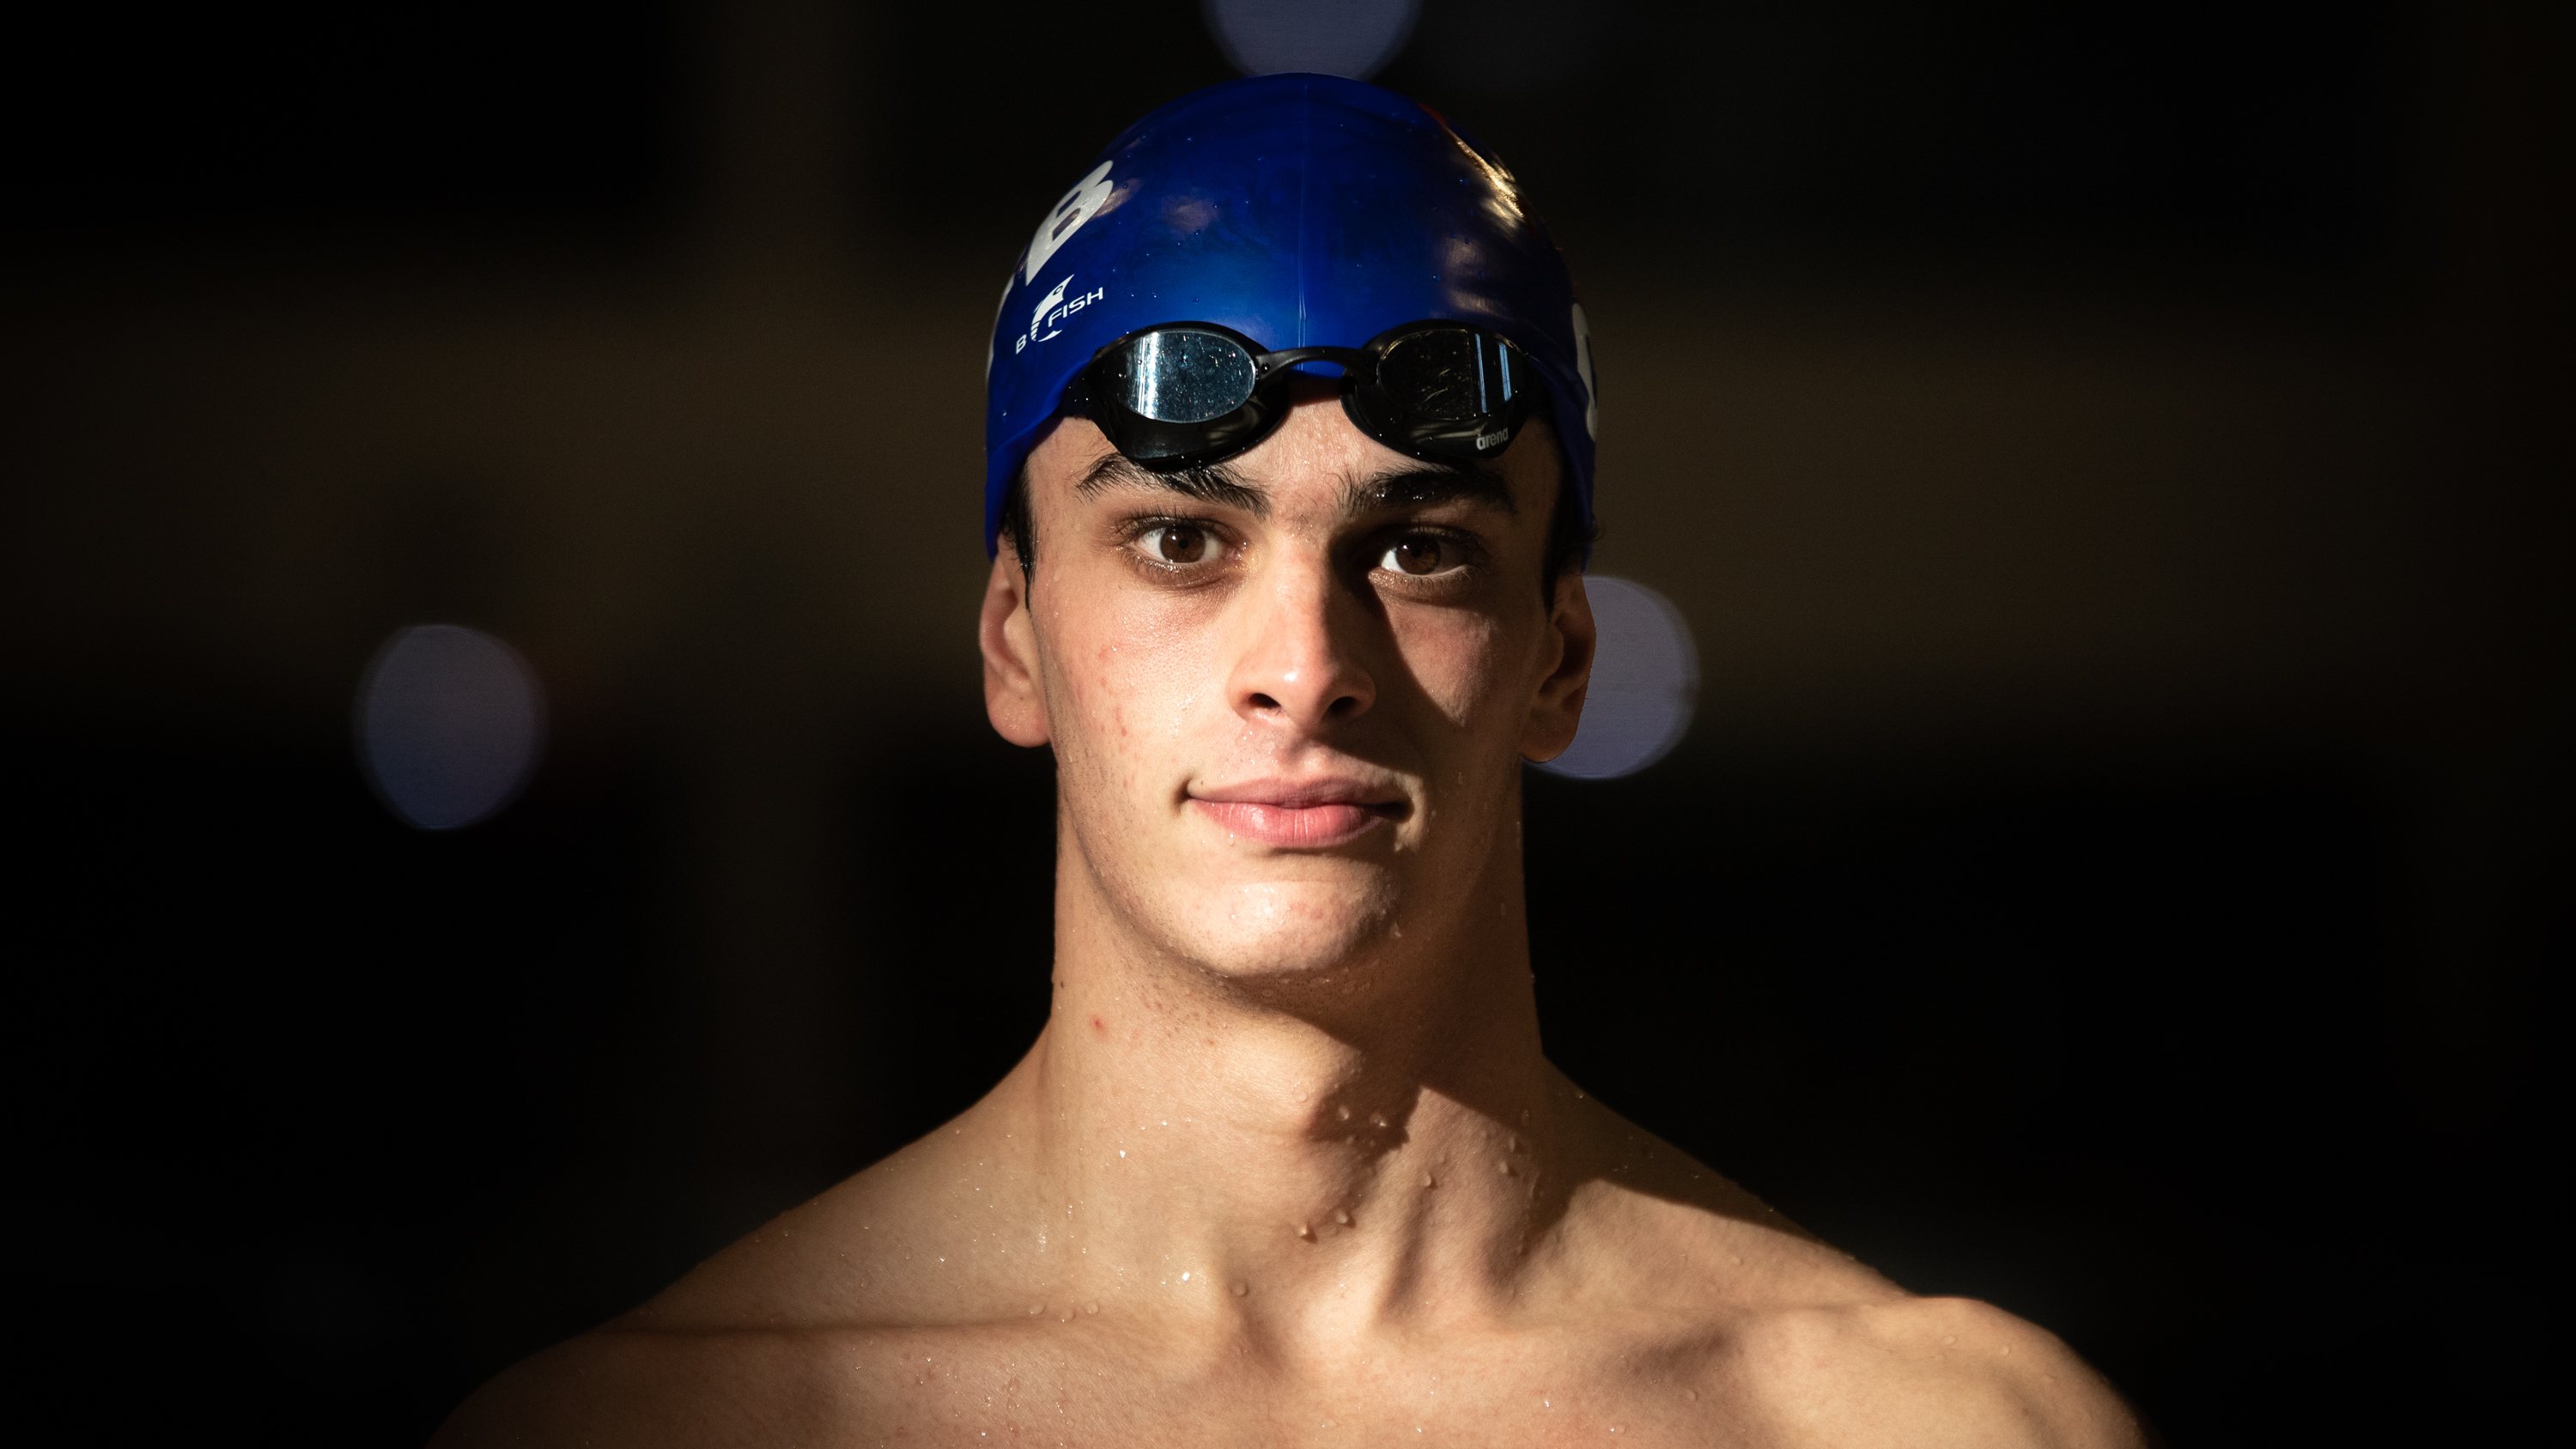 Reportagem &quot;O meu primeiro voto&quot;: Entrevista a Pedro Gomes de 18 anos, que é nadador do Belenenses. Piscinas do Jamor, Lisboa 14 de Janeiro de 2022 TOMÁS SILVA/OBSERVADOR